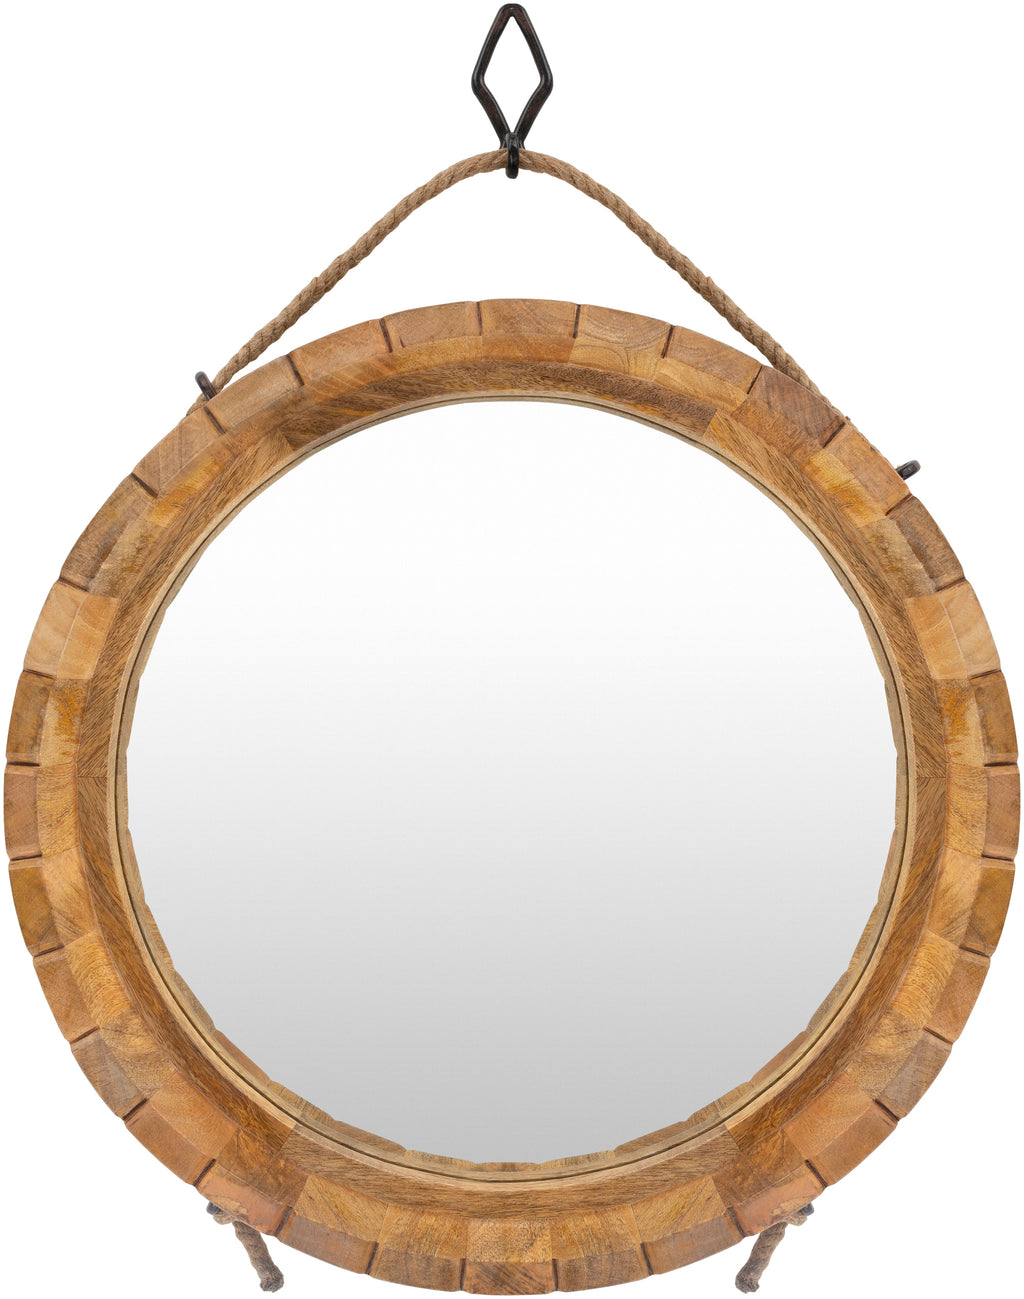 Kentucky Wood Natural Mirror 2'2"H x 1'7"W Round